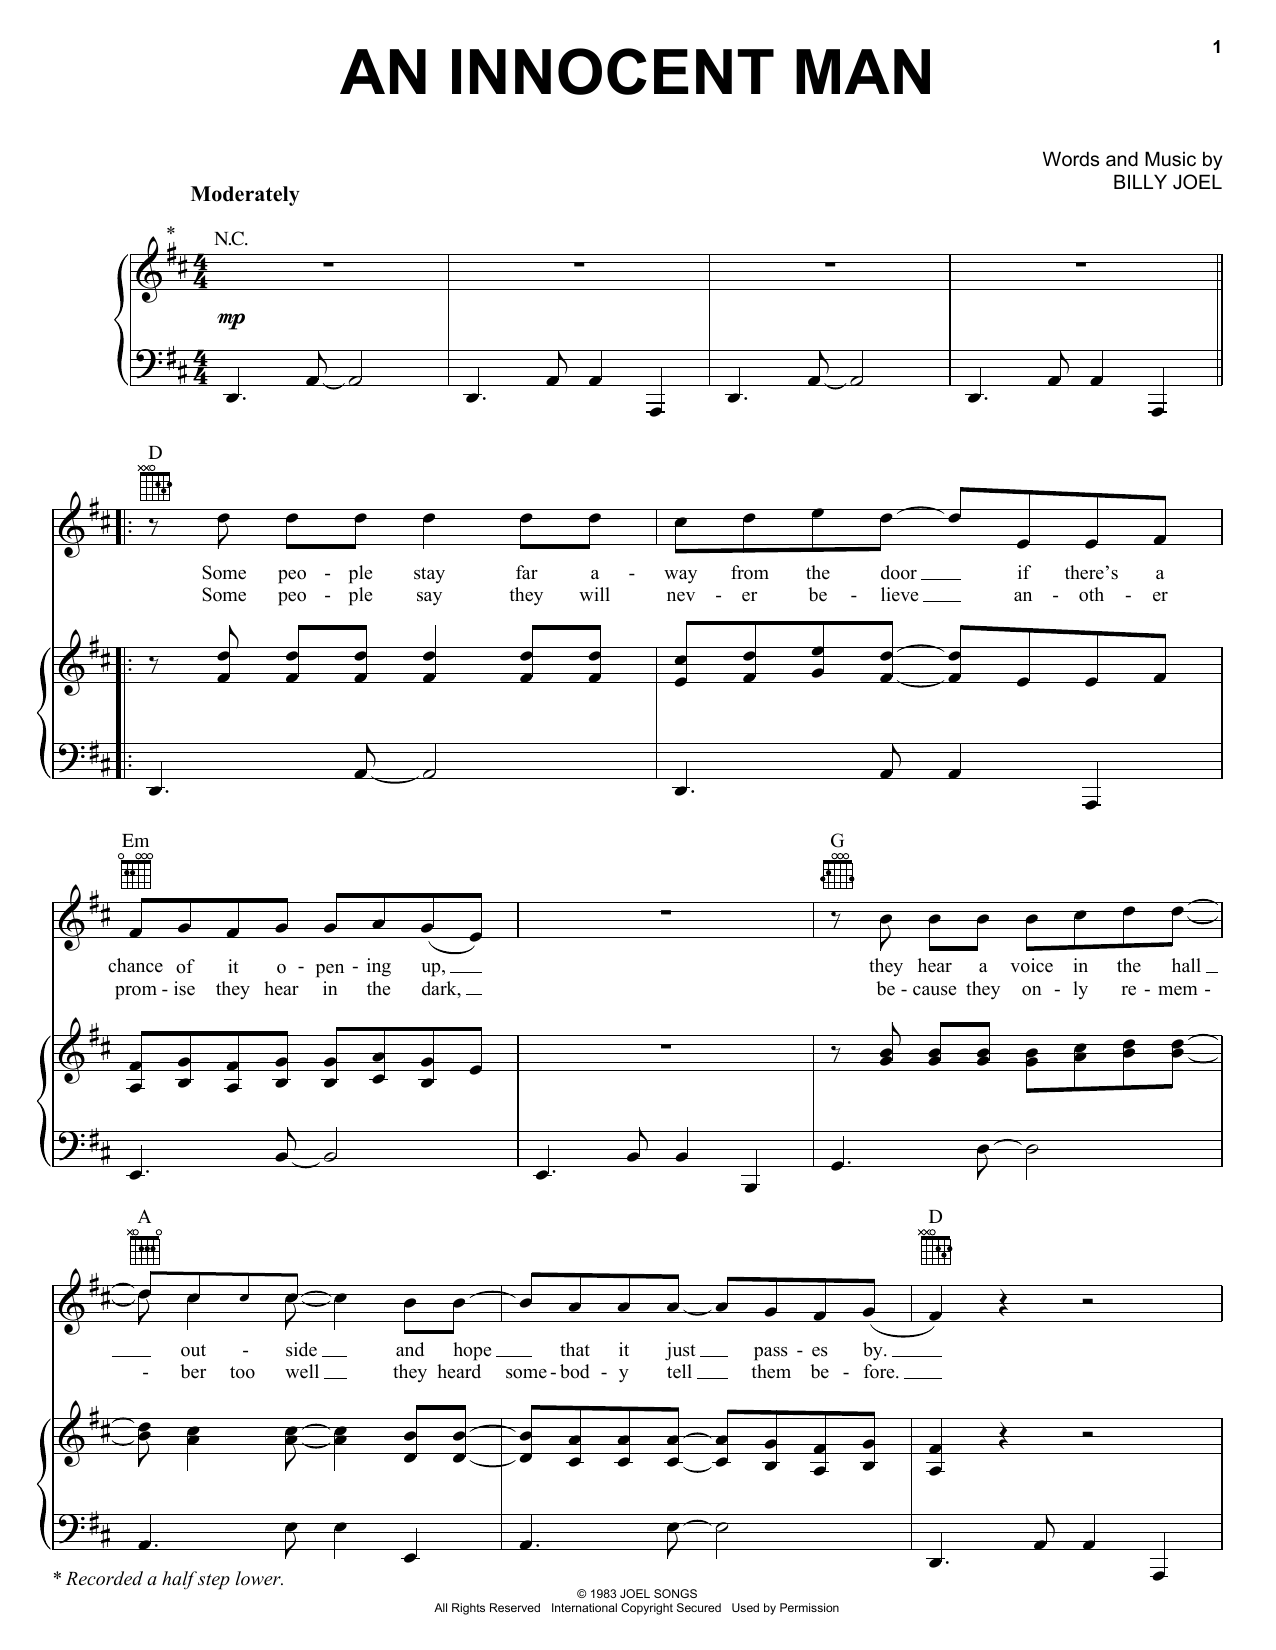 Billy Joel An Innocent Man Sheet Music Notes & Chords for Keyboard Transcription - Download or Print PDF